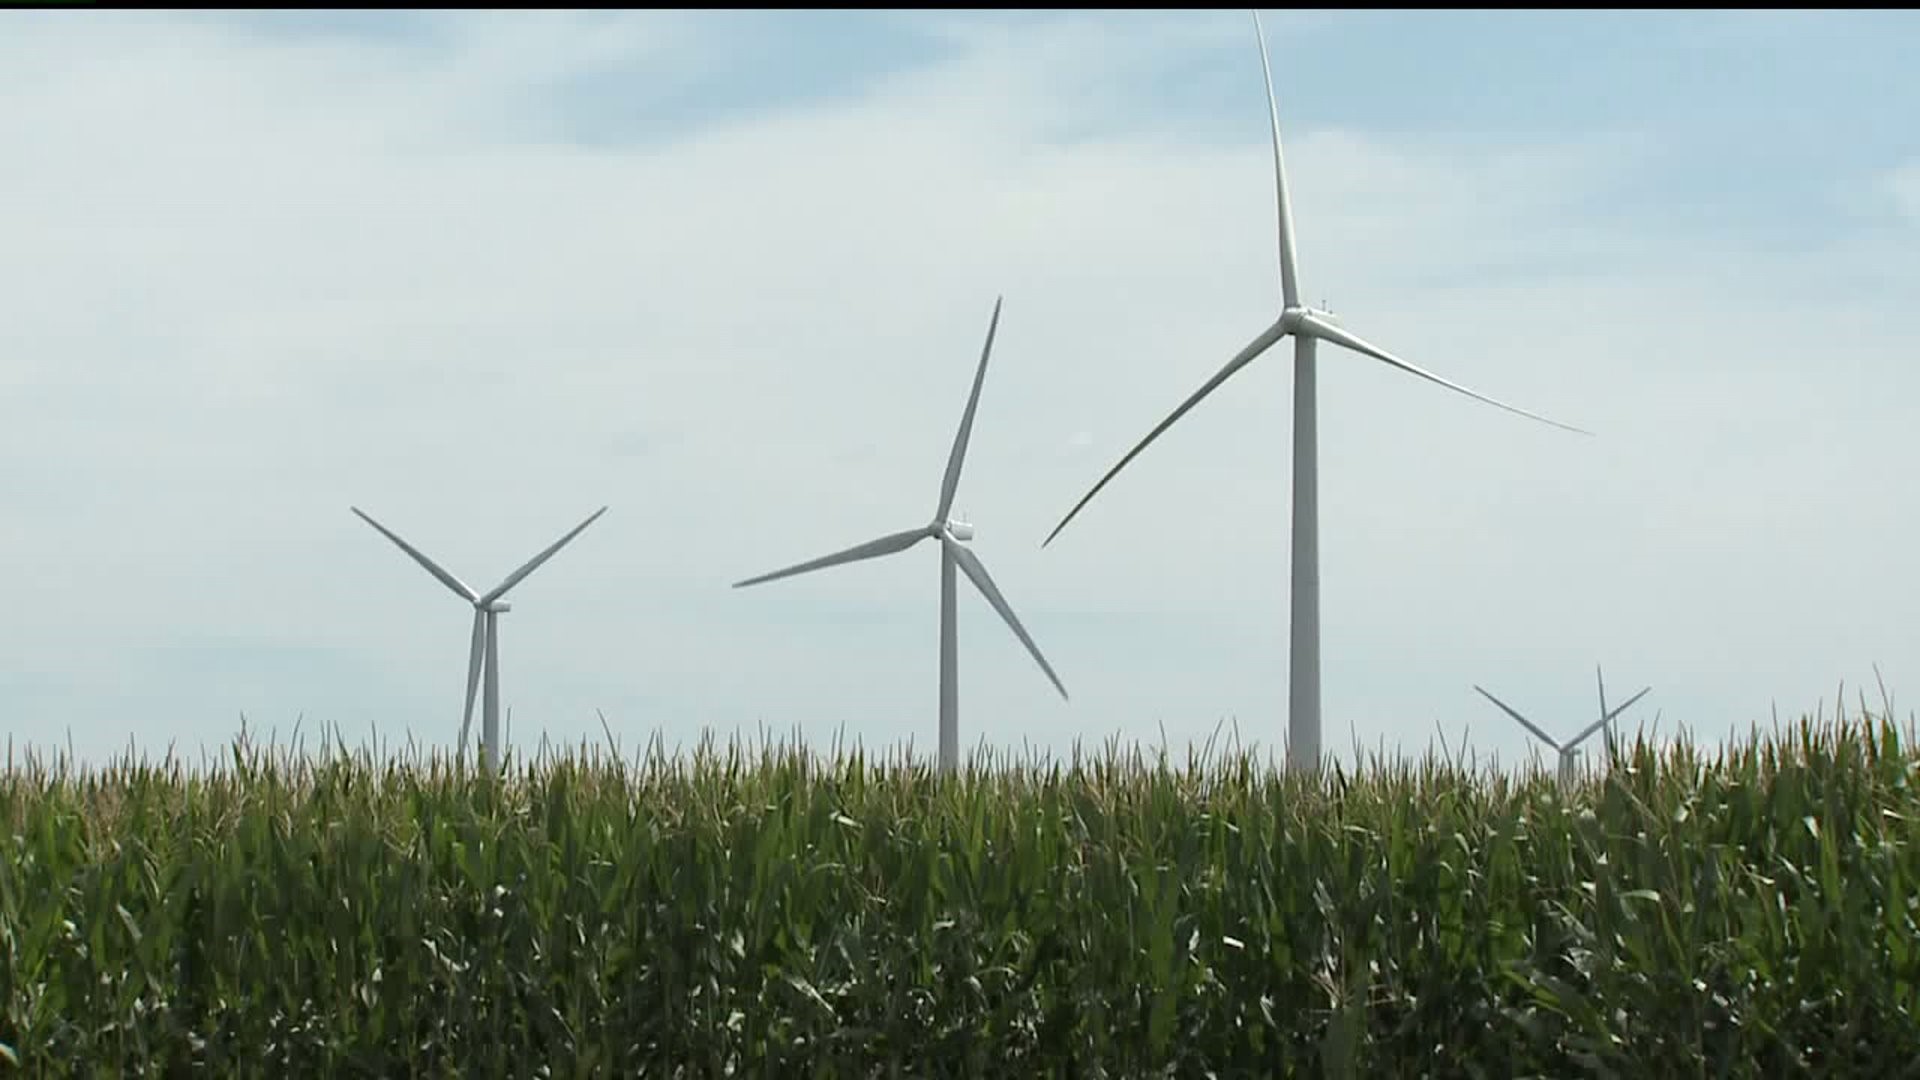 Company looking at Aledo, Illinois for renewable energy